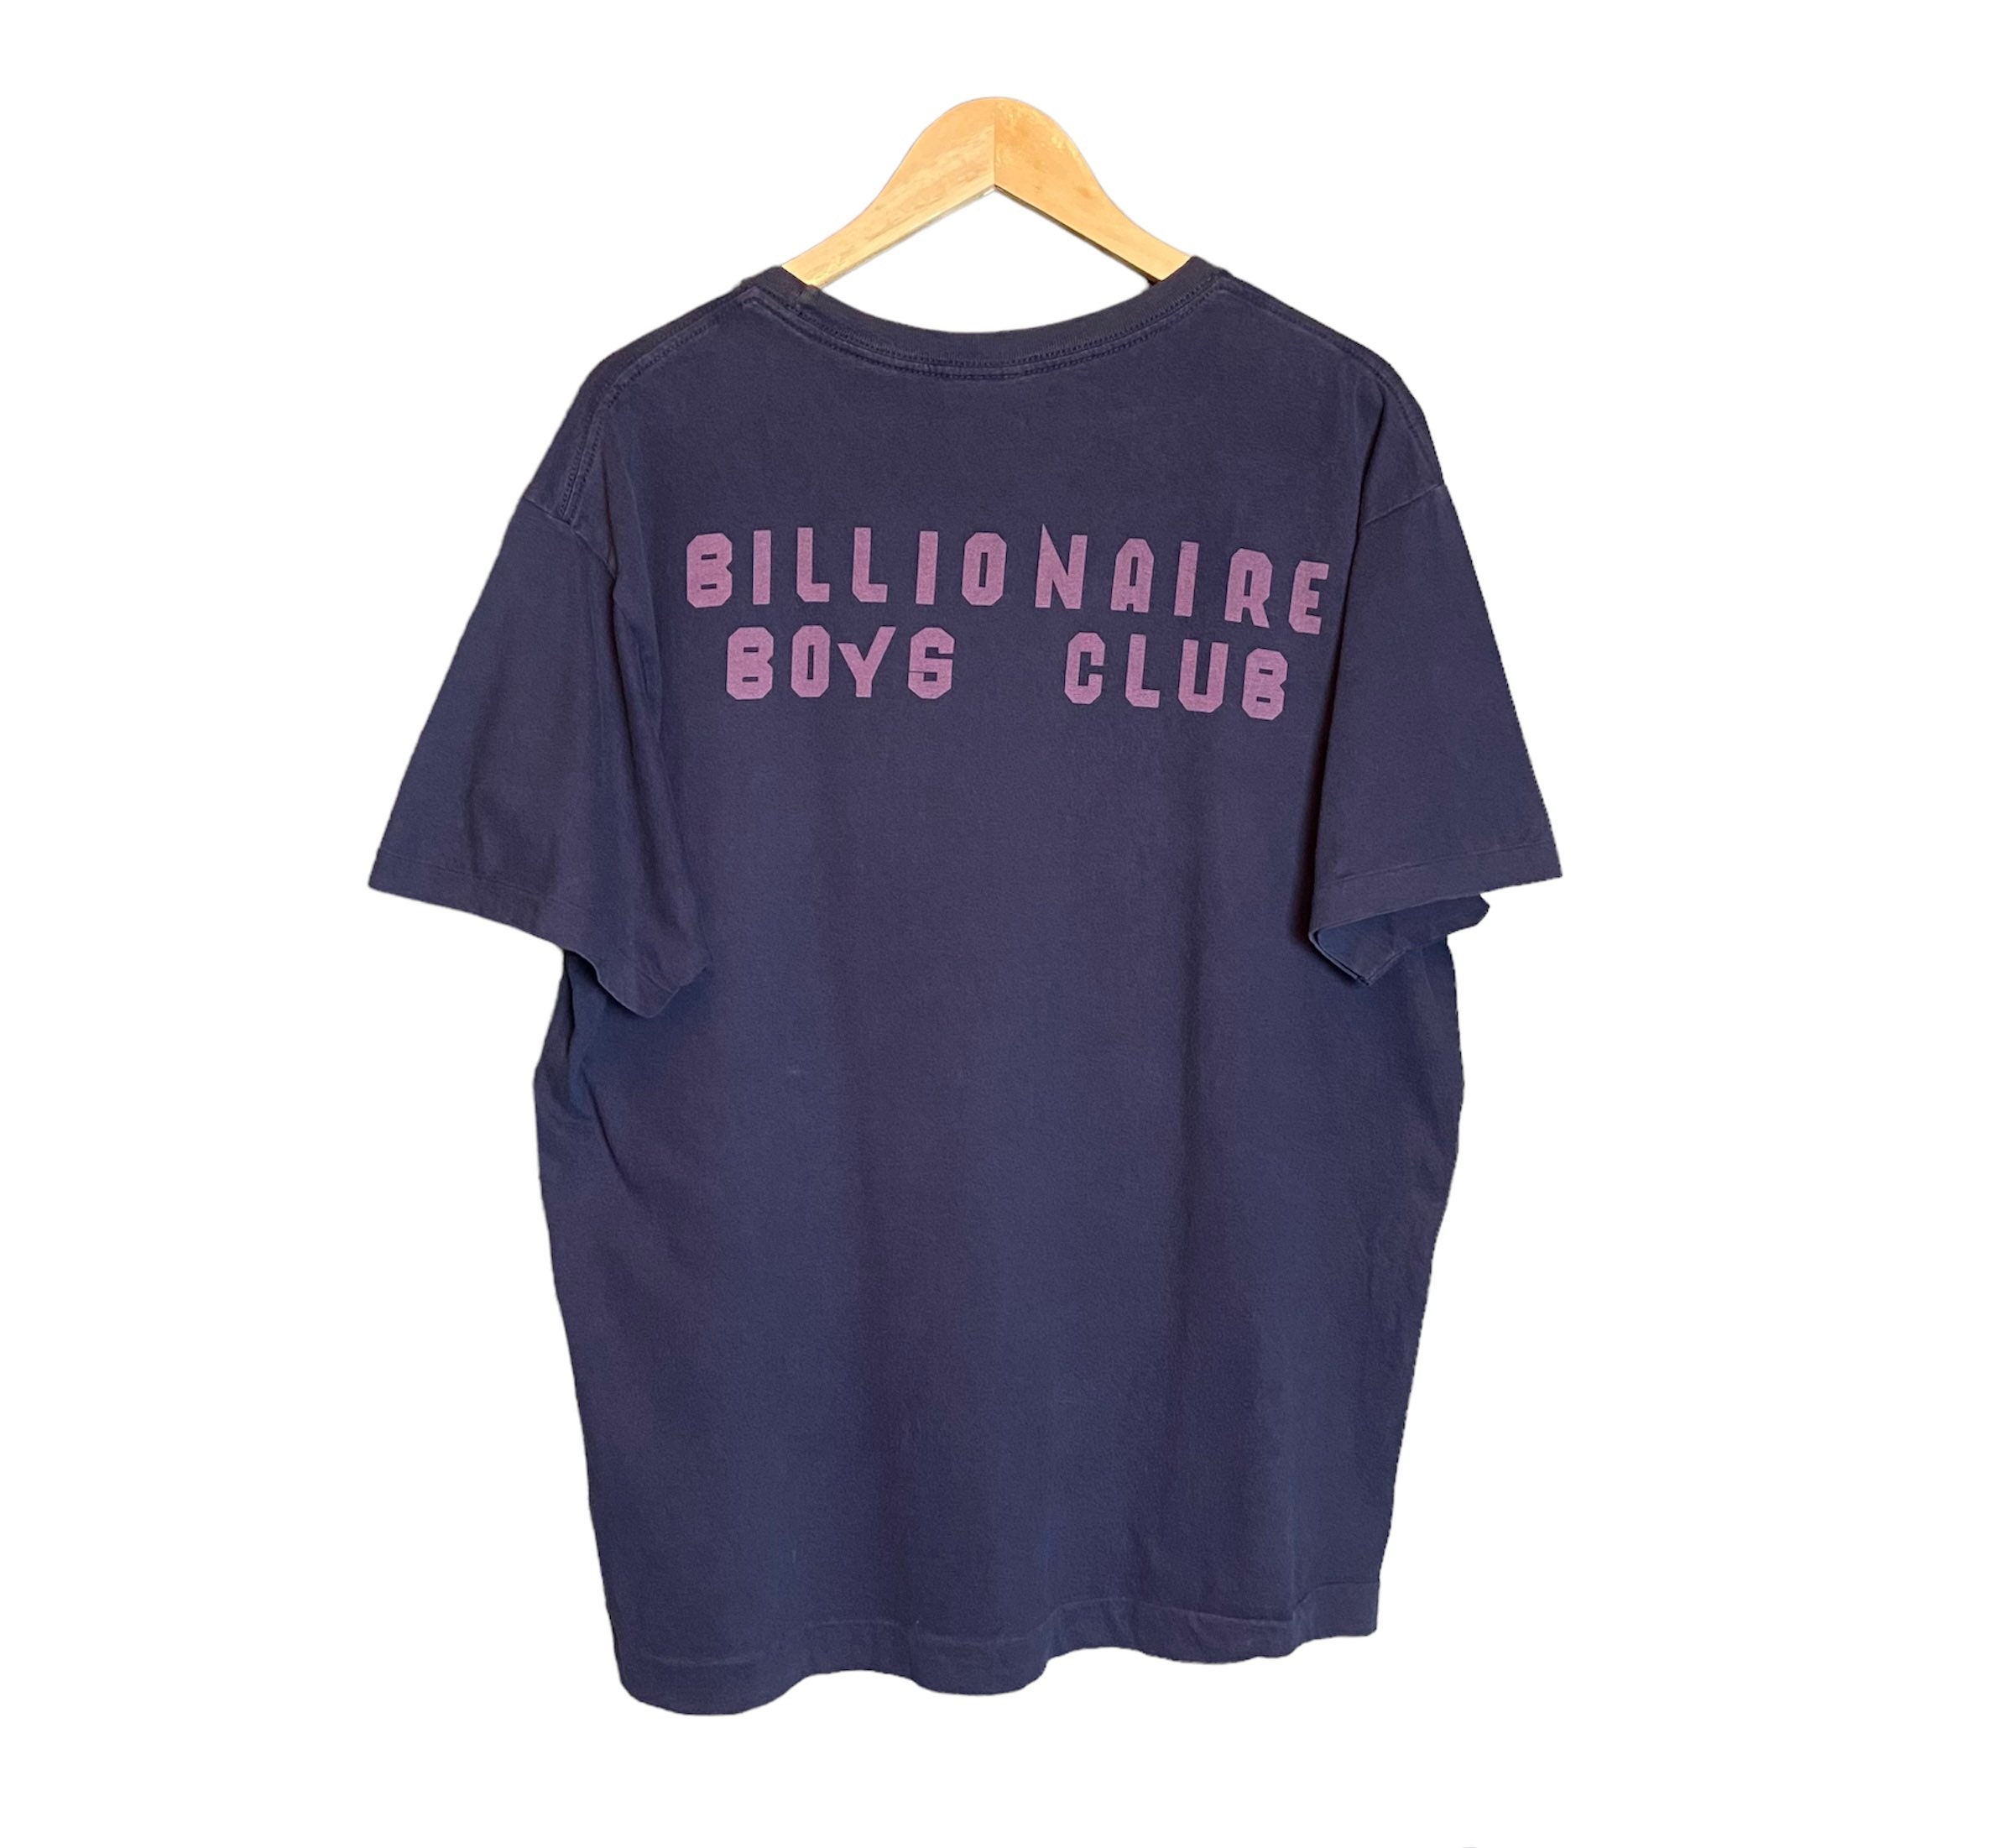  BILLIONAIRE BOYS CLUB BBC - Camiseta para hombre